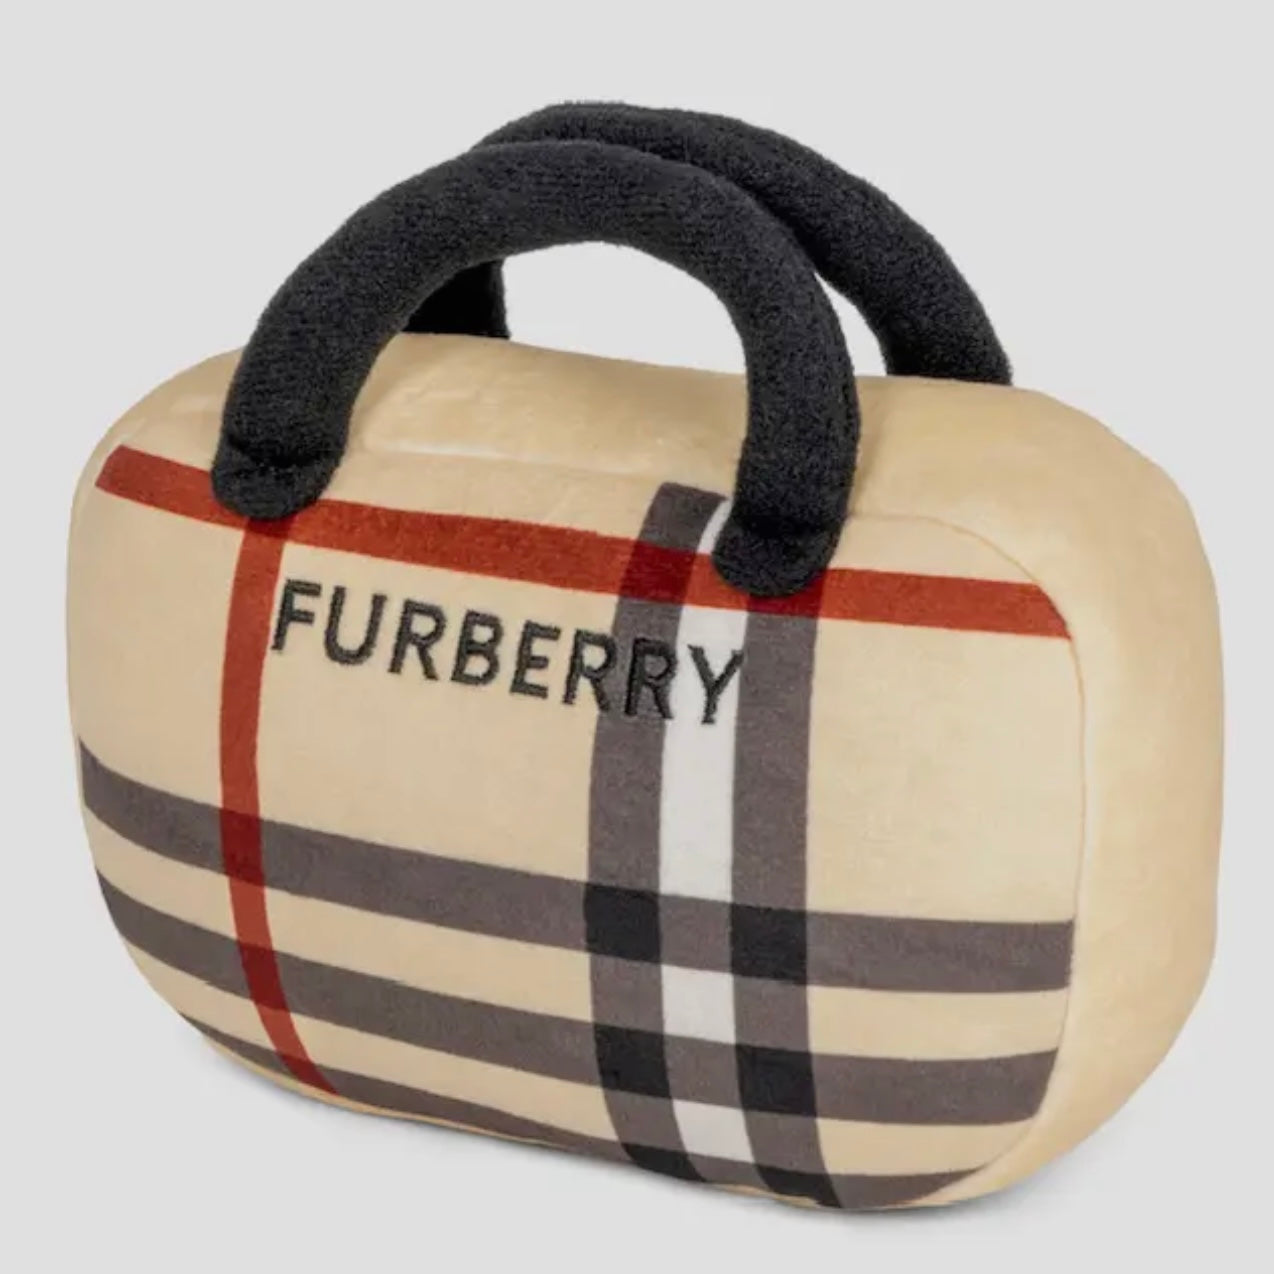 Furberry Handbag Dog Toy